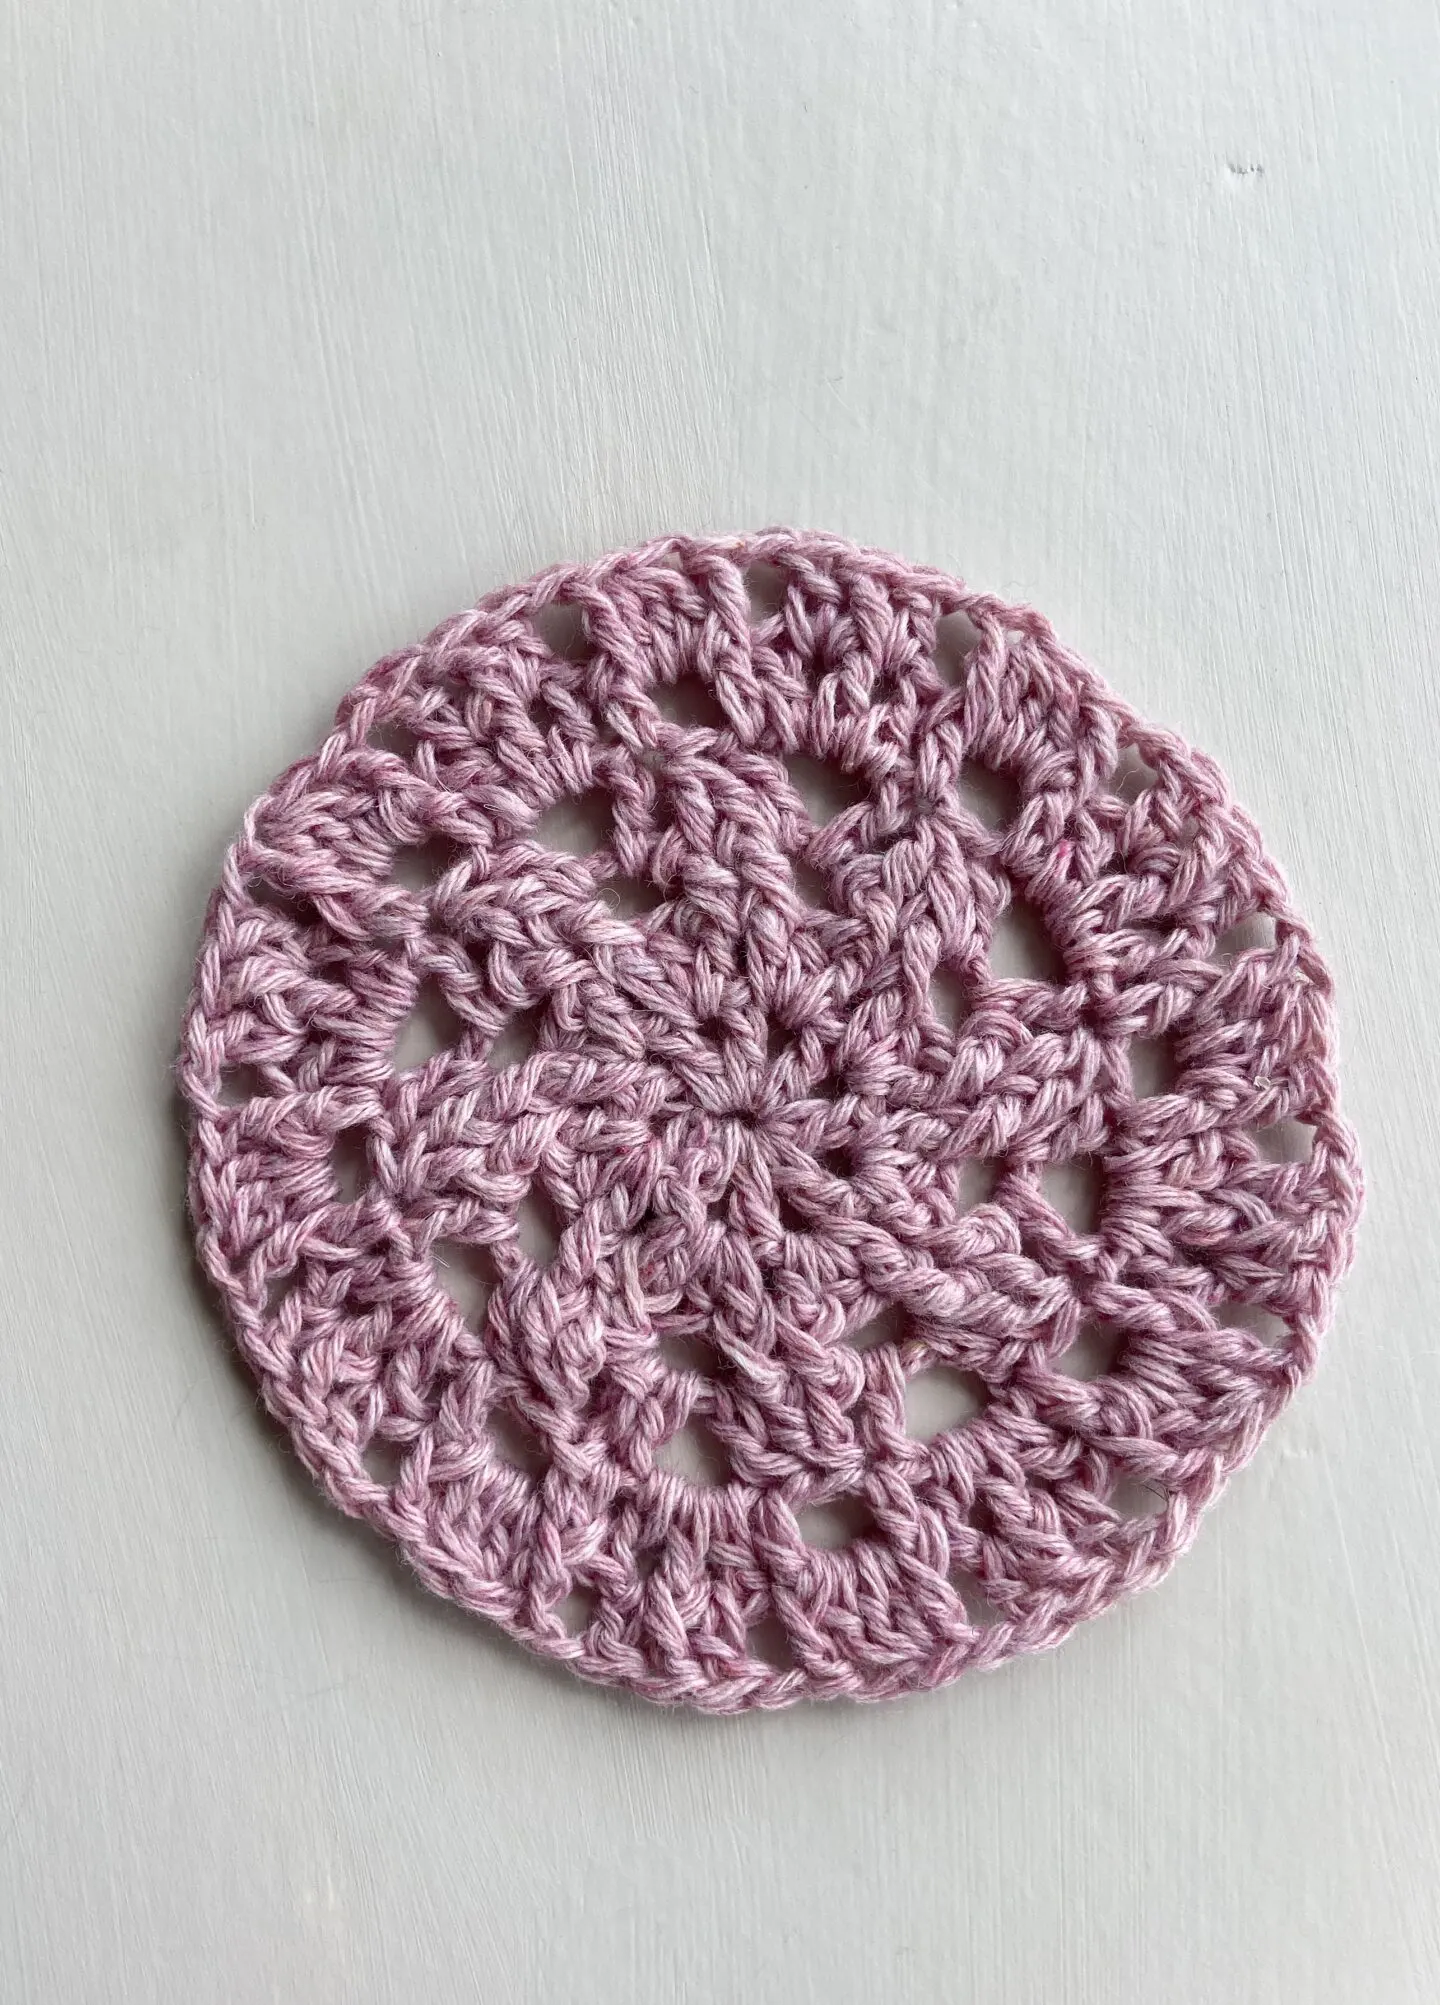 Lace Crochet Coaster Pattern 2.